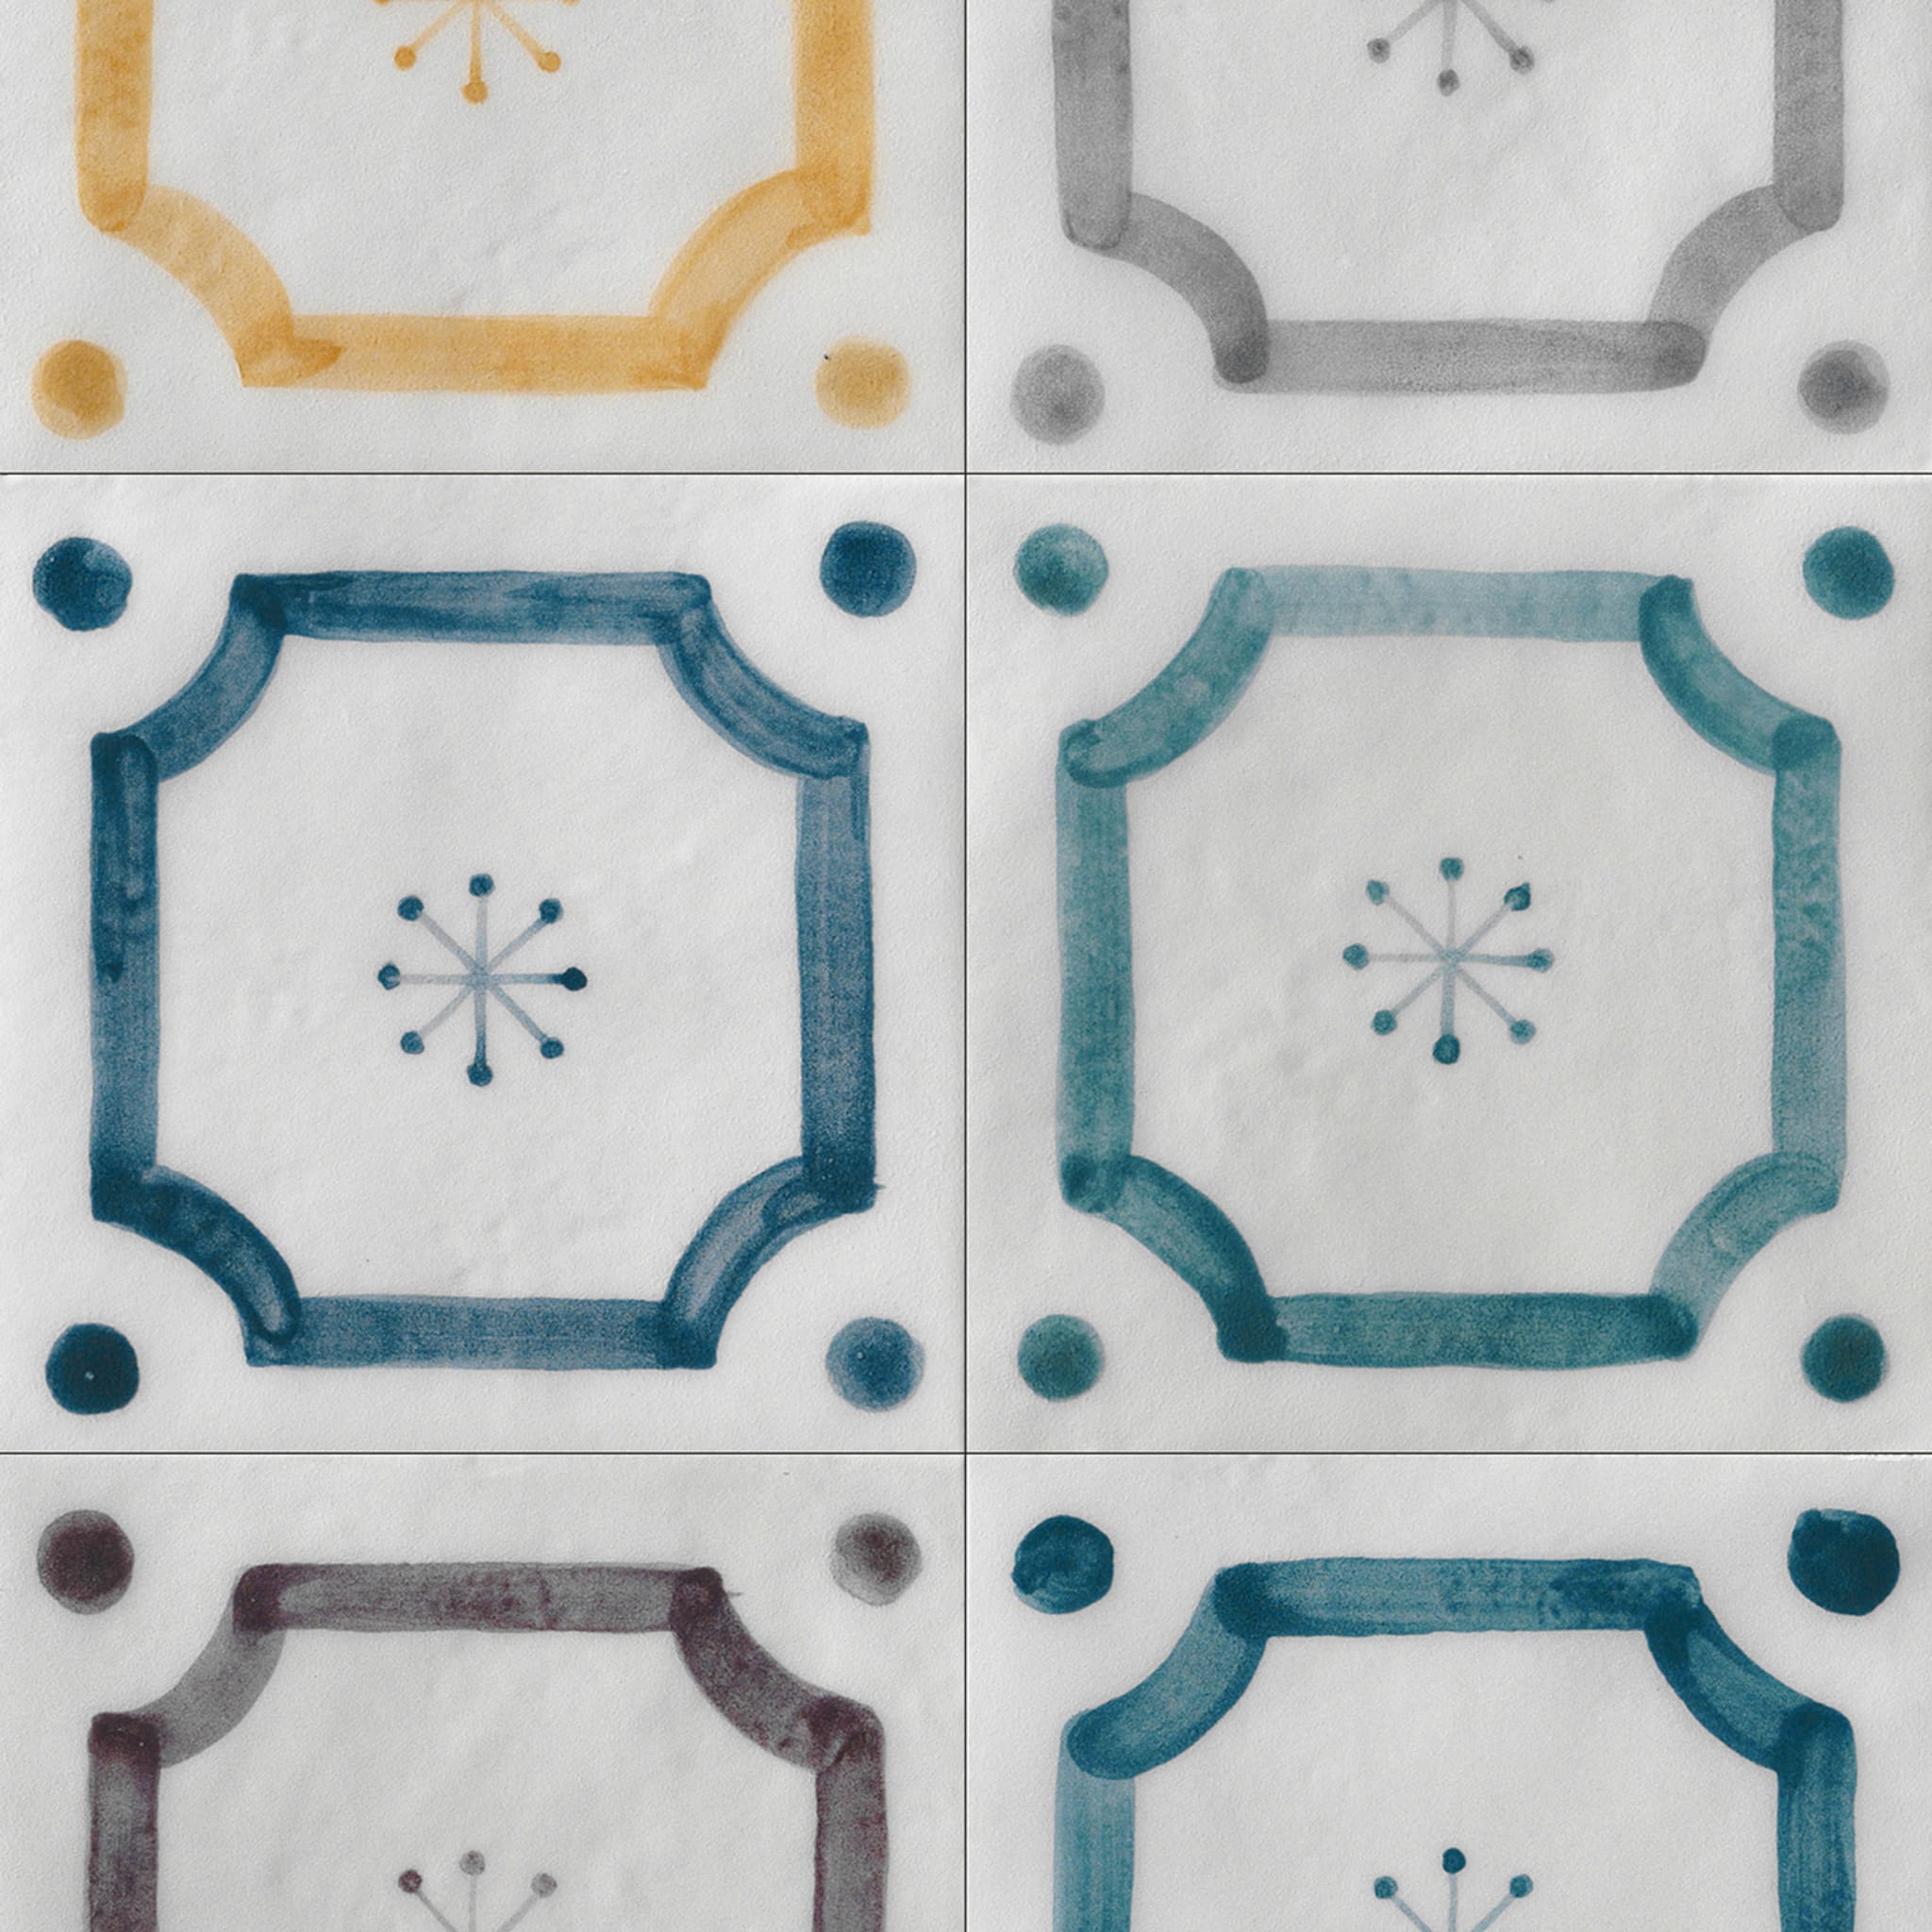 Ot Budoni Oceano Set of 24 Square Tiles - Alternative view 1